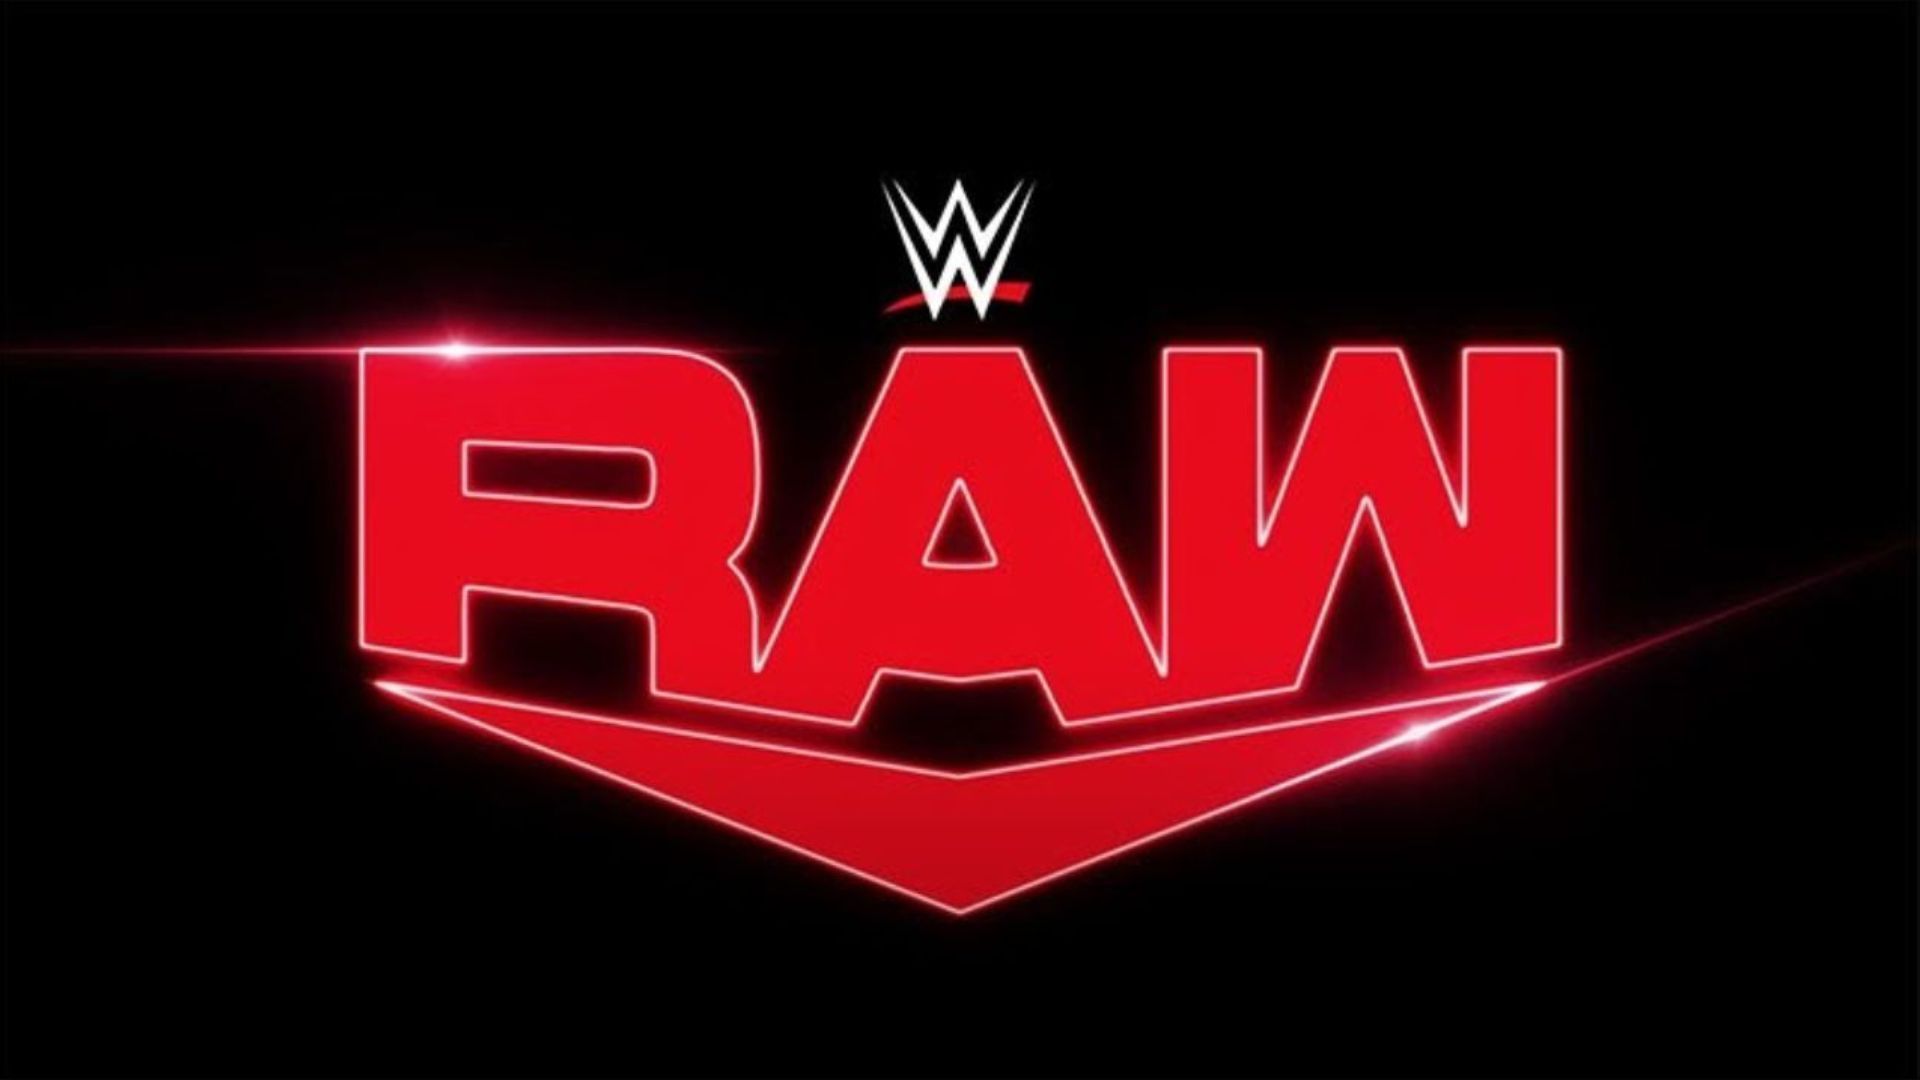 WWE had an eventful Monday Night RAW this week